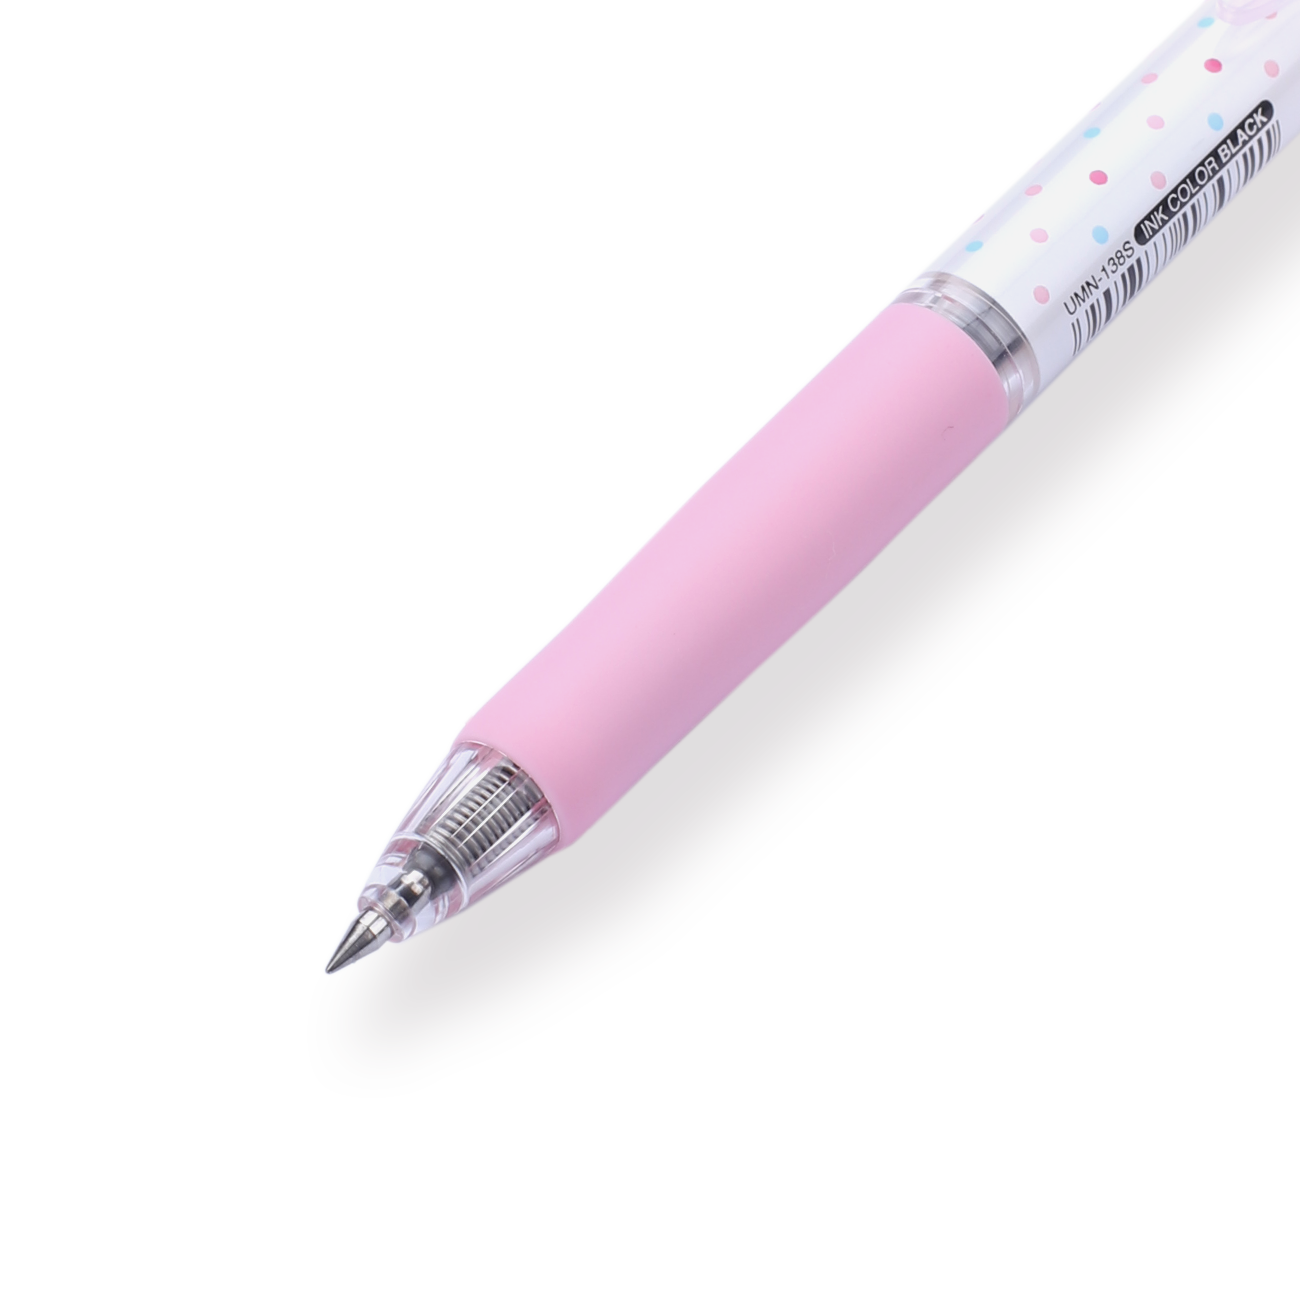 Uni-ball Signo RT Gel Ink Pen Limited Edition - Light Pink Polka Dot - 0.38 mm